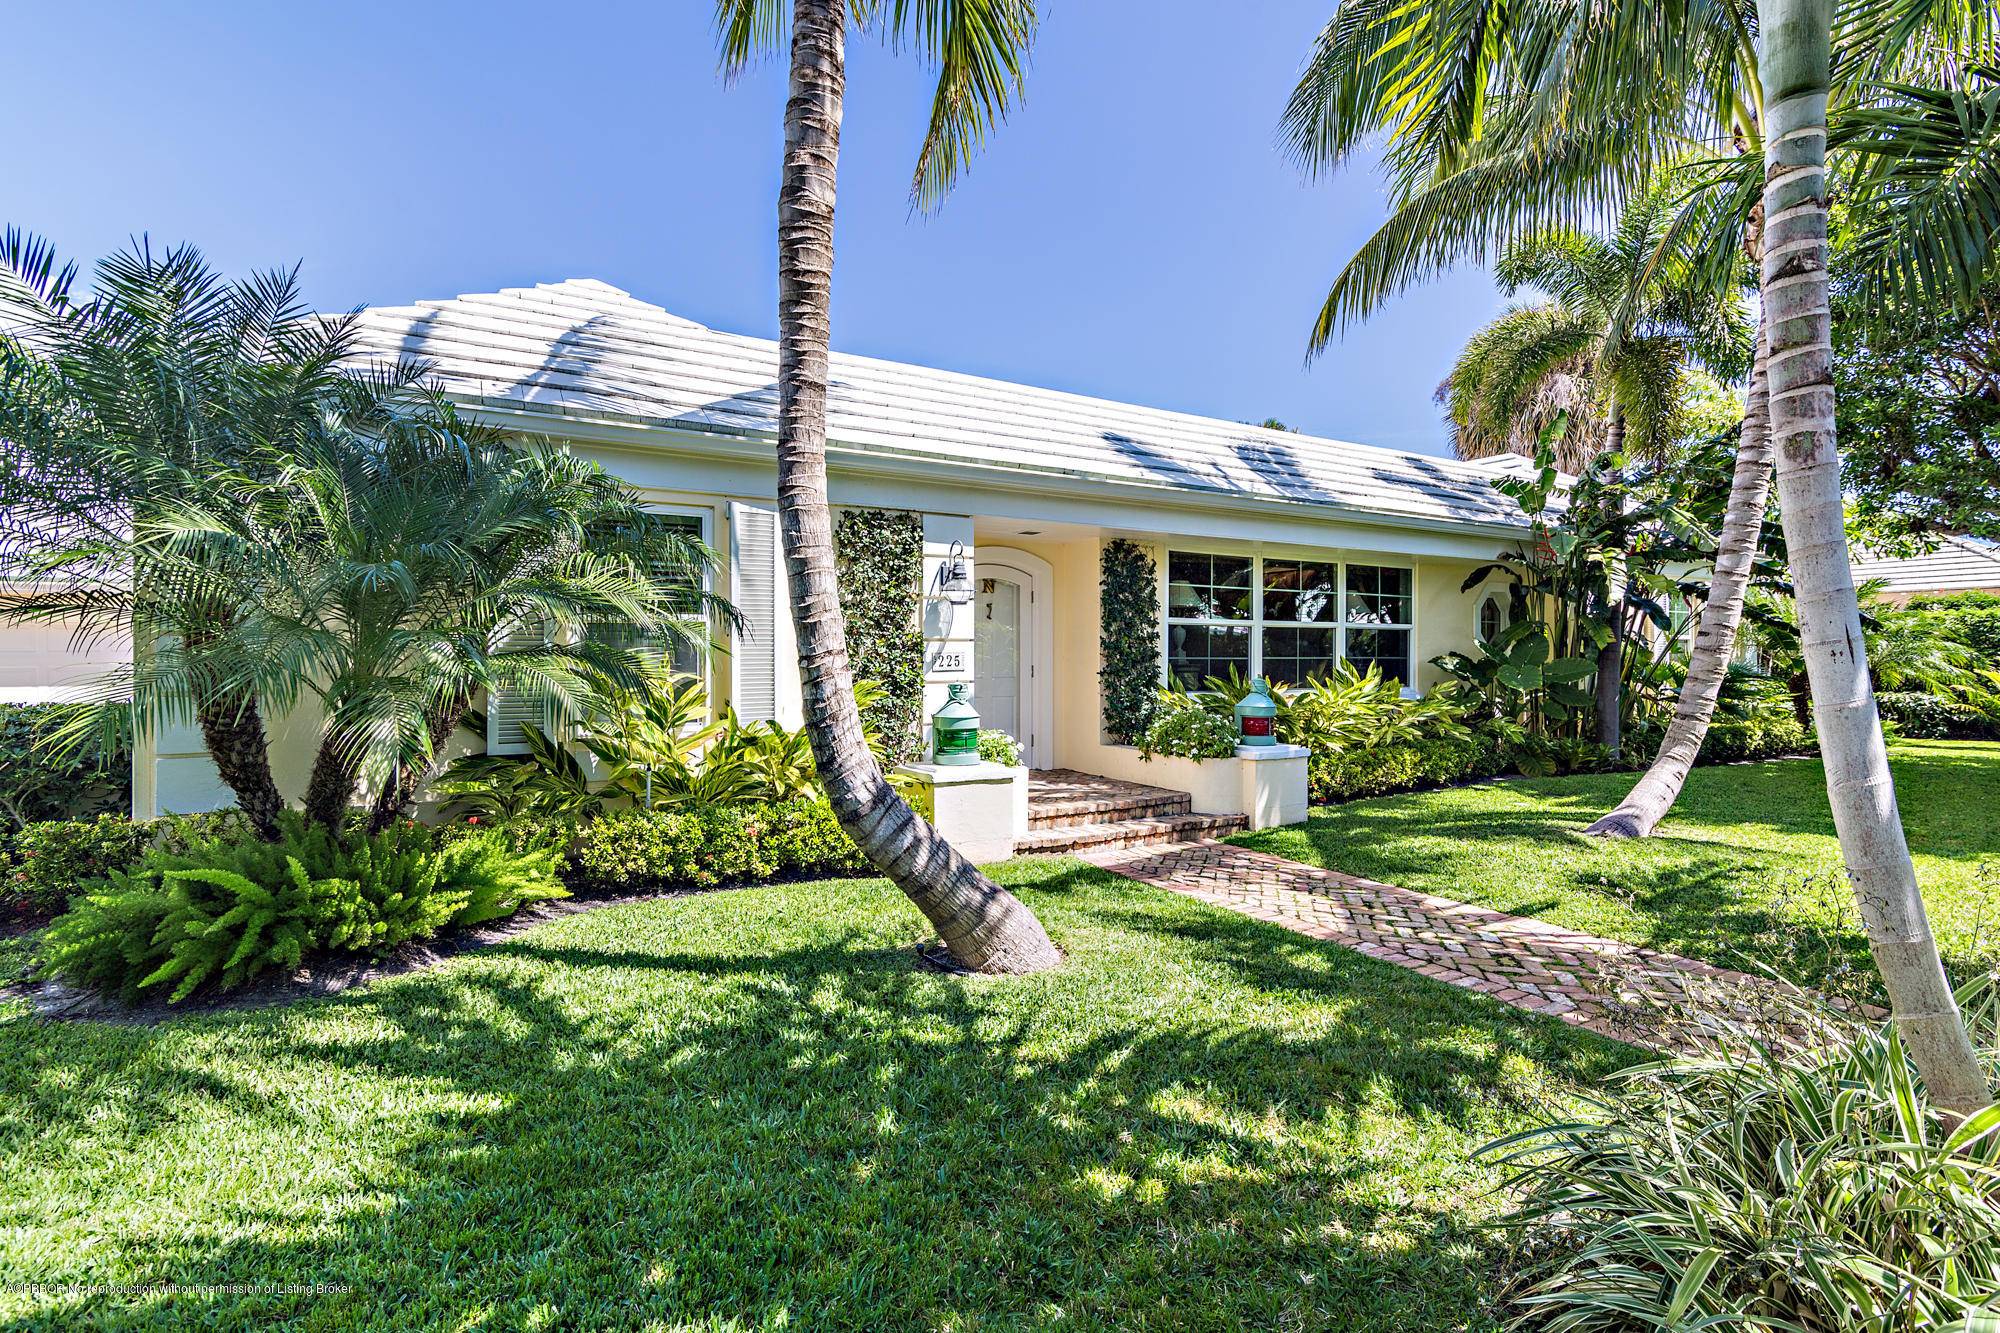 Beautifully decorated Palm Beach Island home.